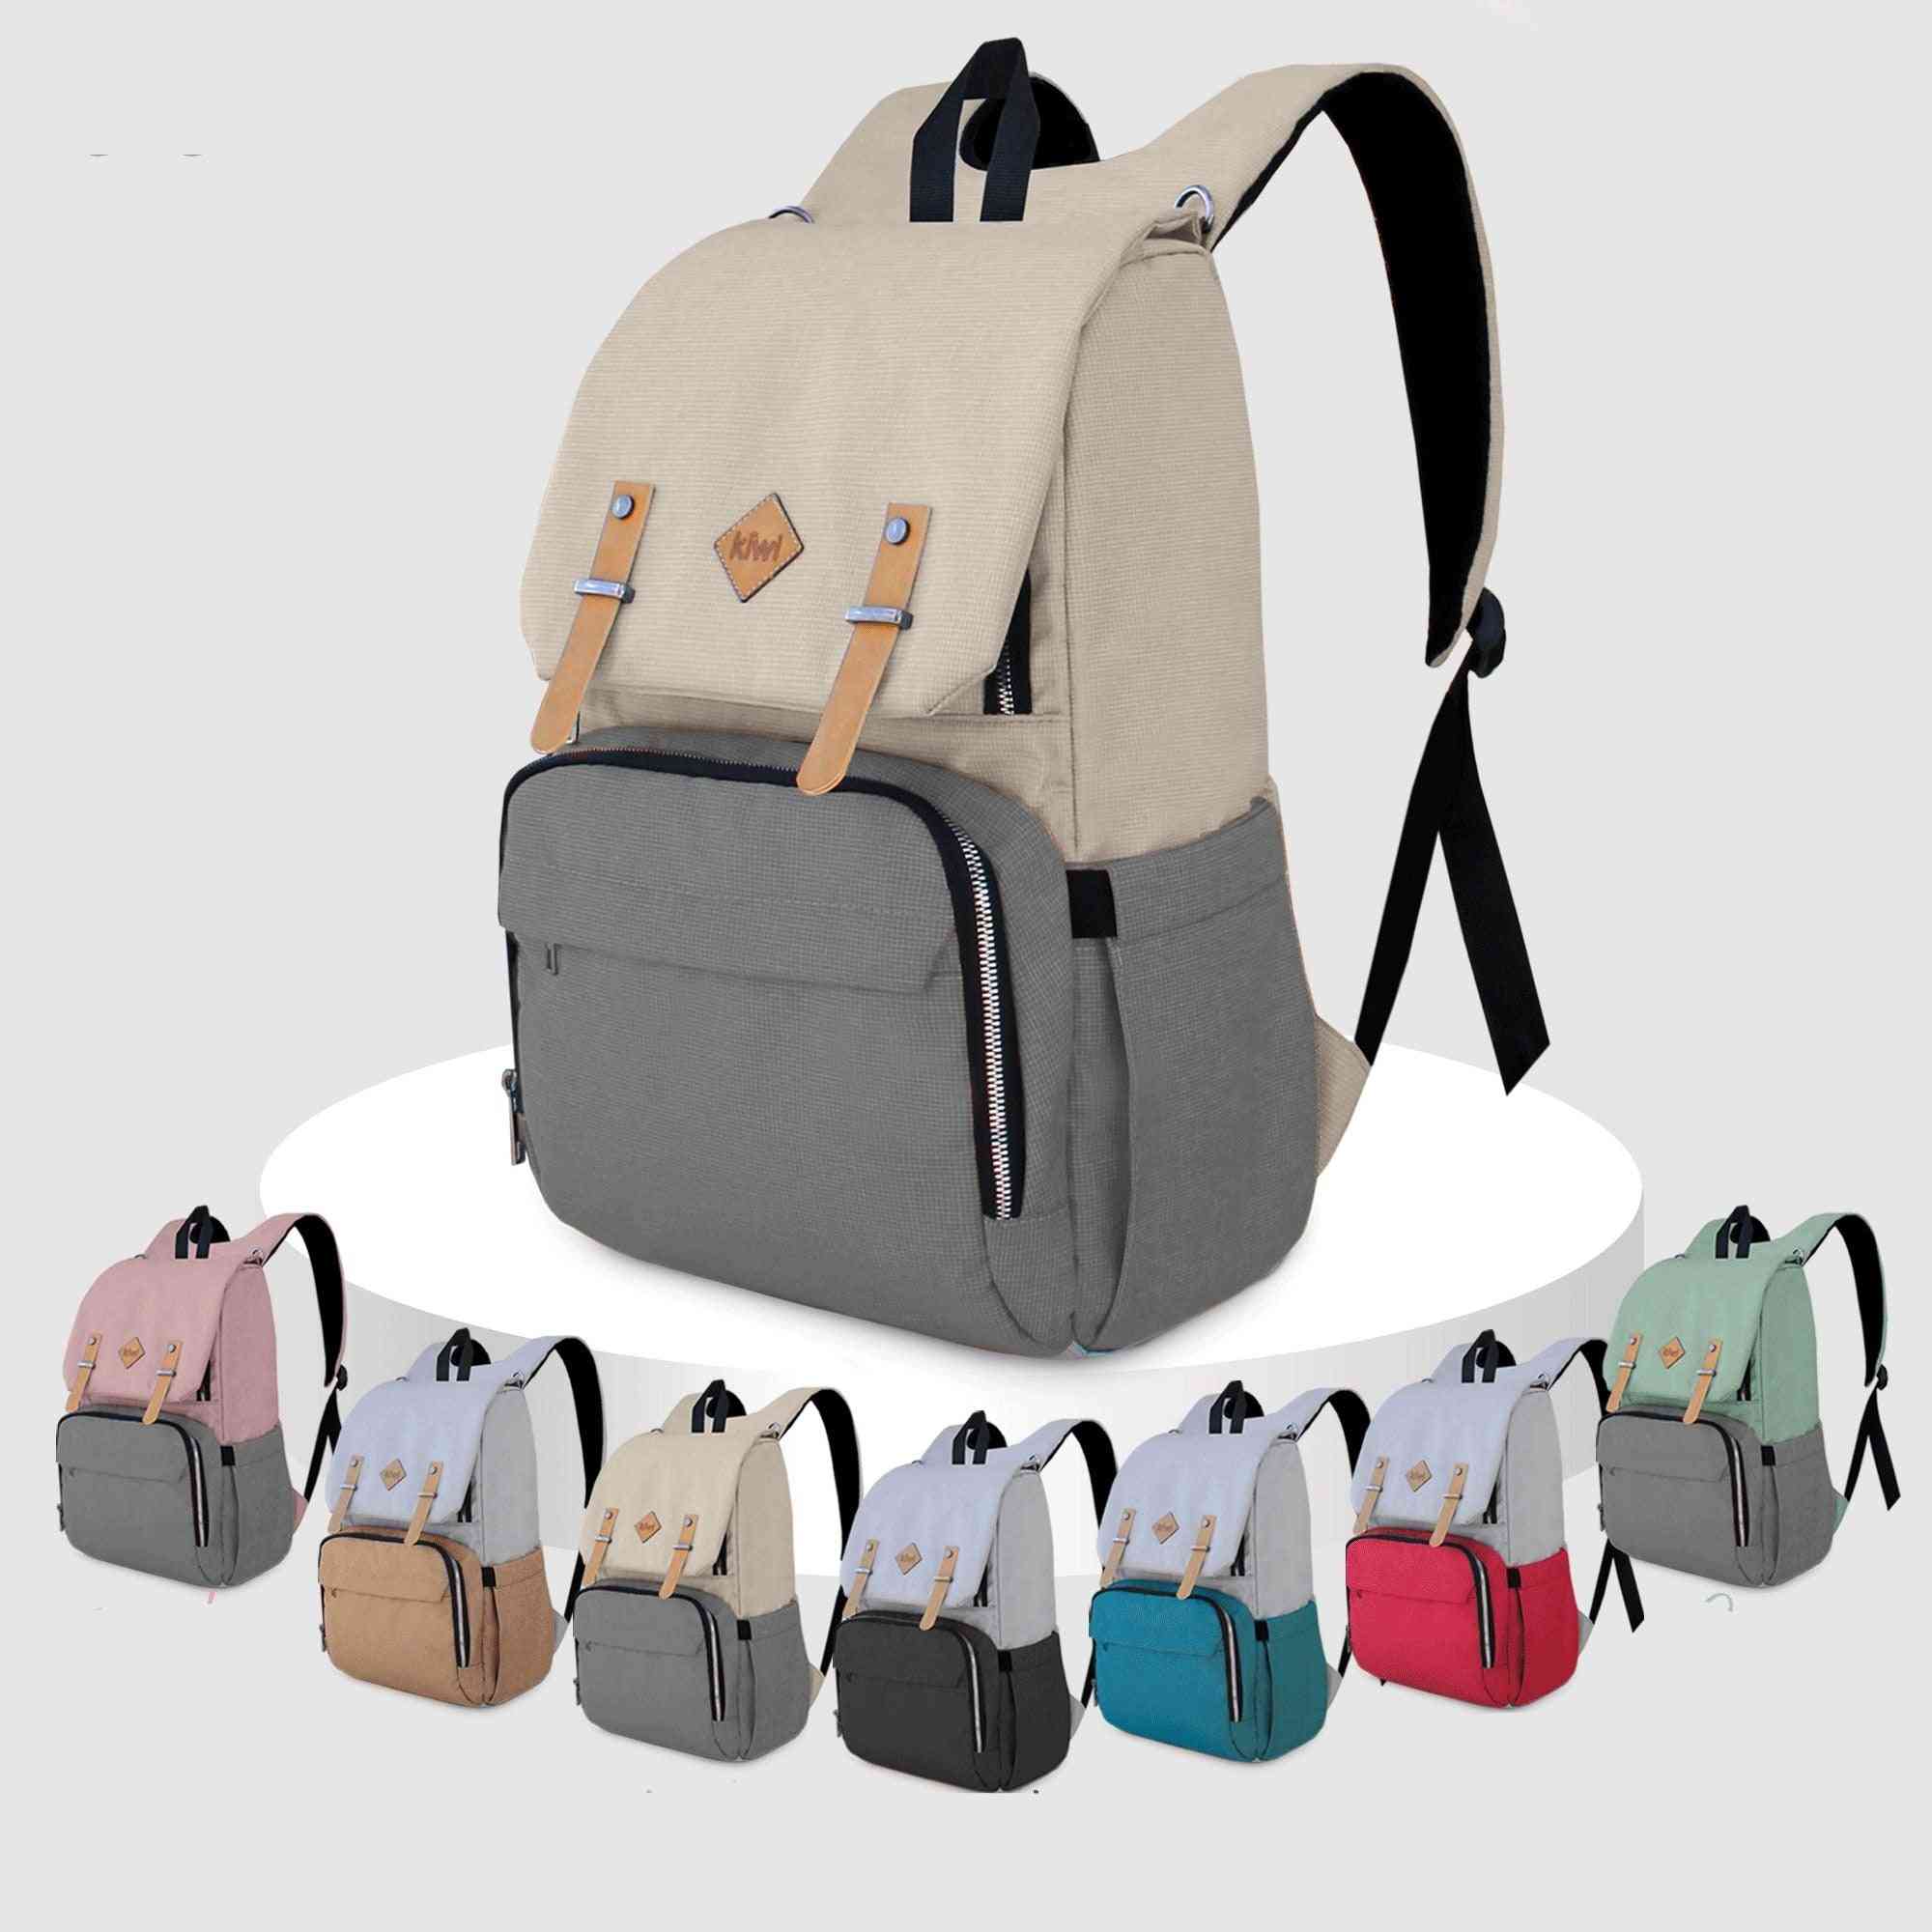 Baby Latte, Kiwi Backpack, Cool Bag